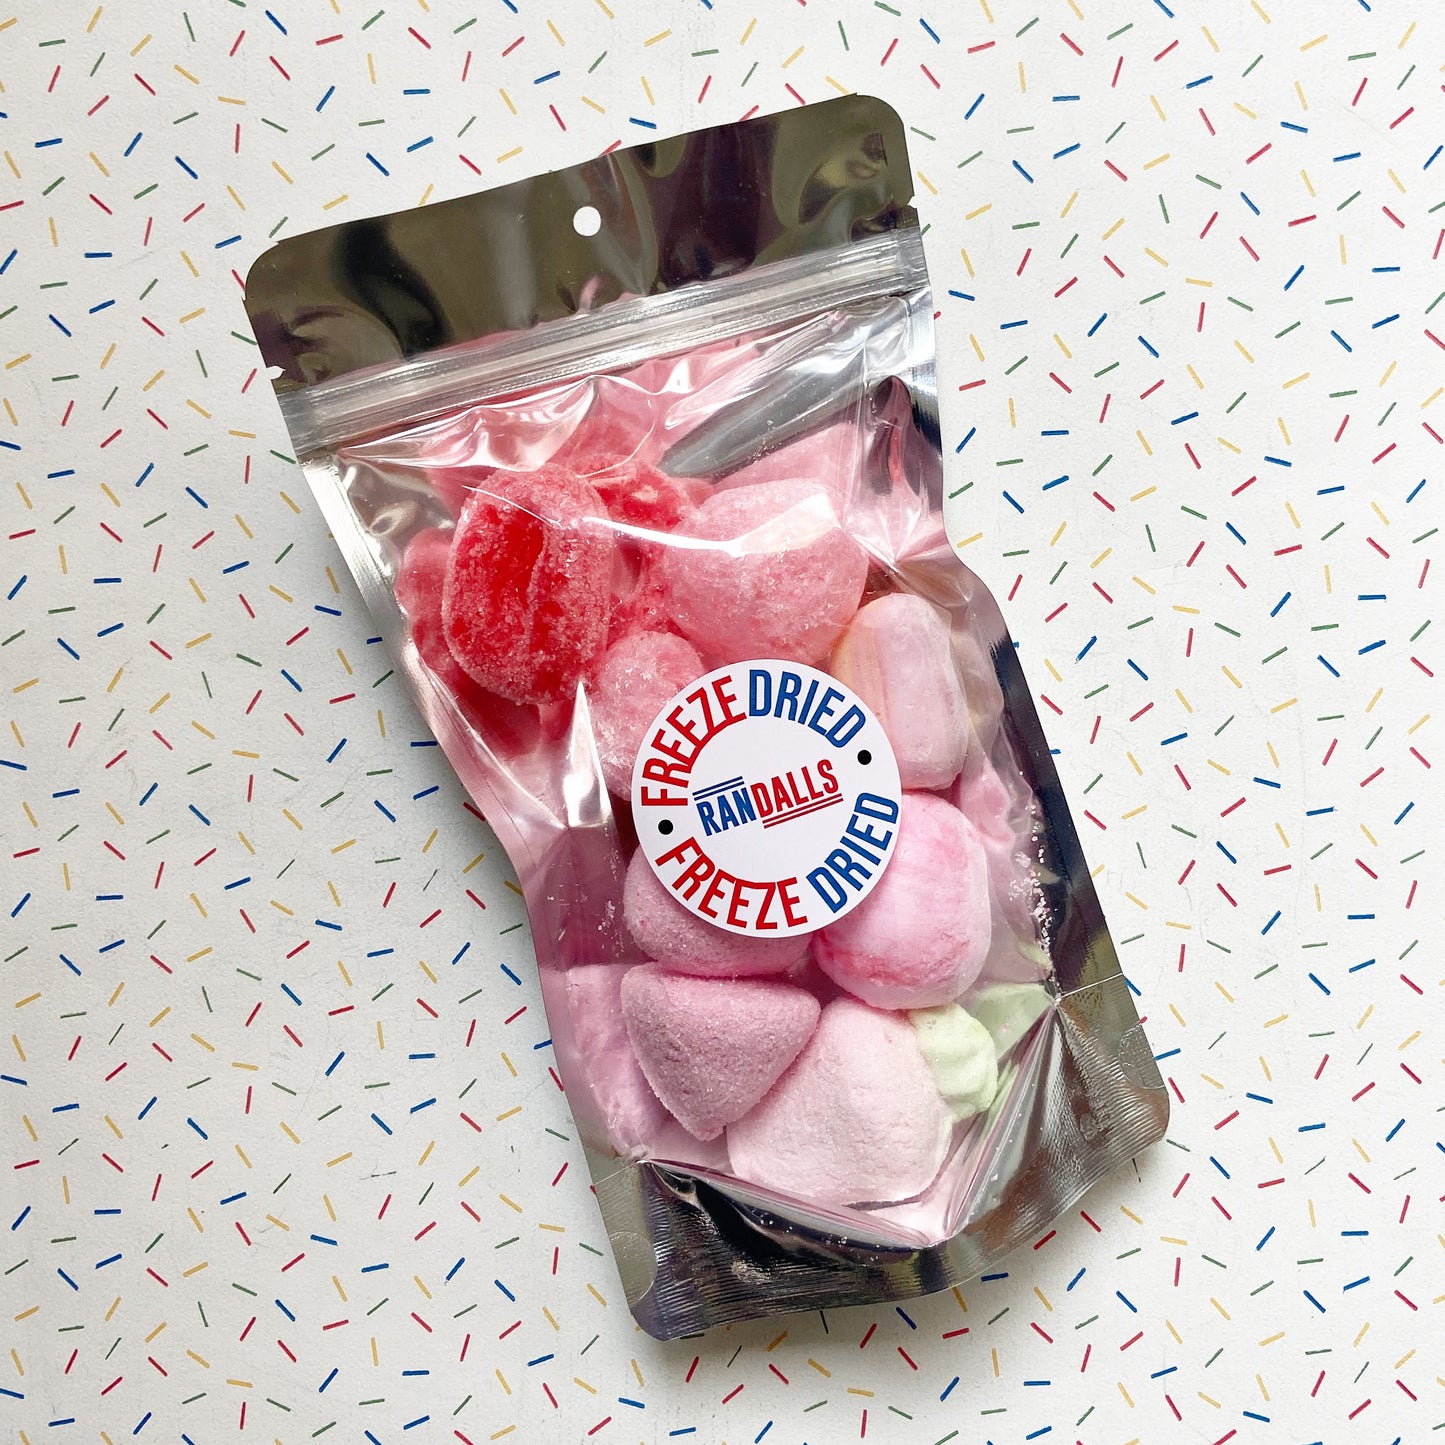 freeze dried pink mix, candy, sweet, freezedried, paintballs, strawberries, randalls